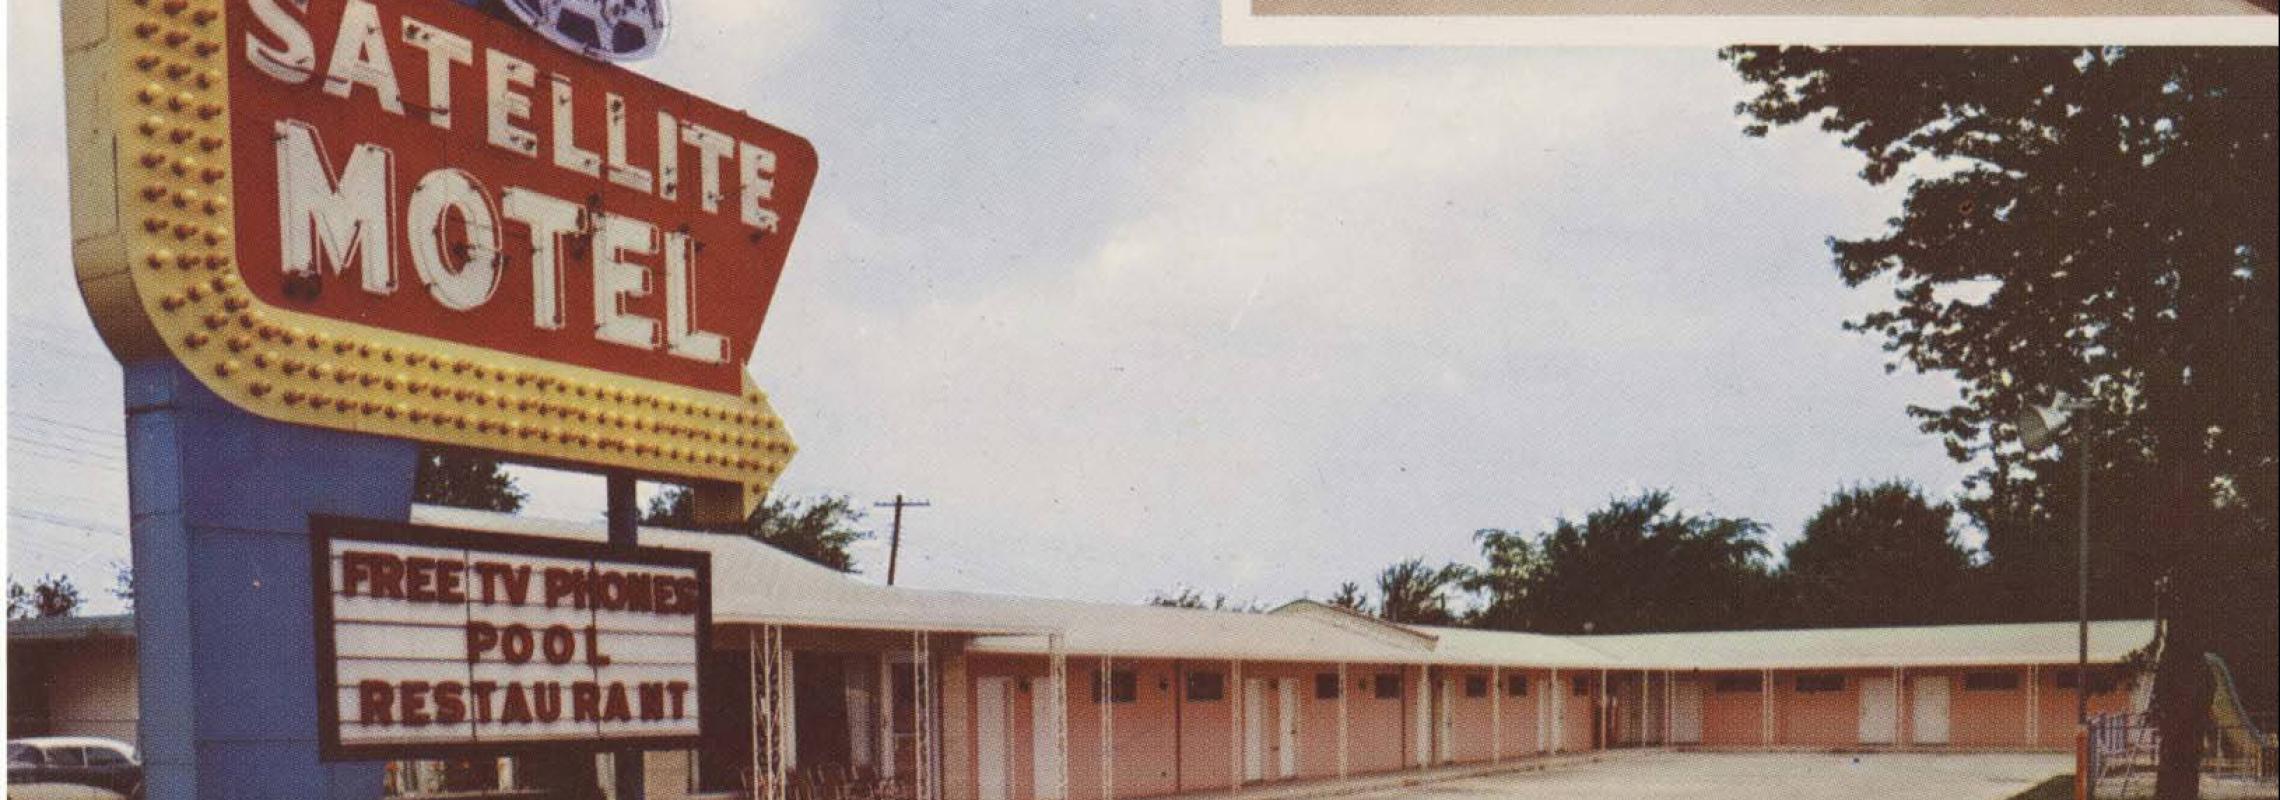 1950s postcard of Satellite Motel in Springfield, Mo.